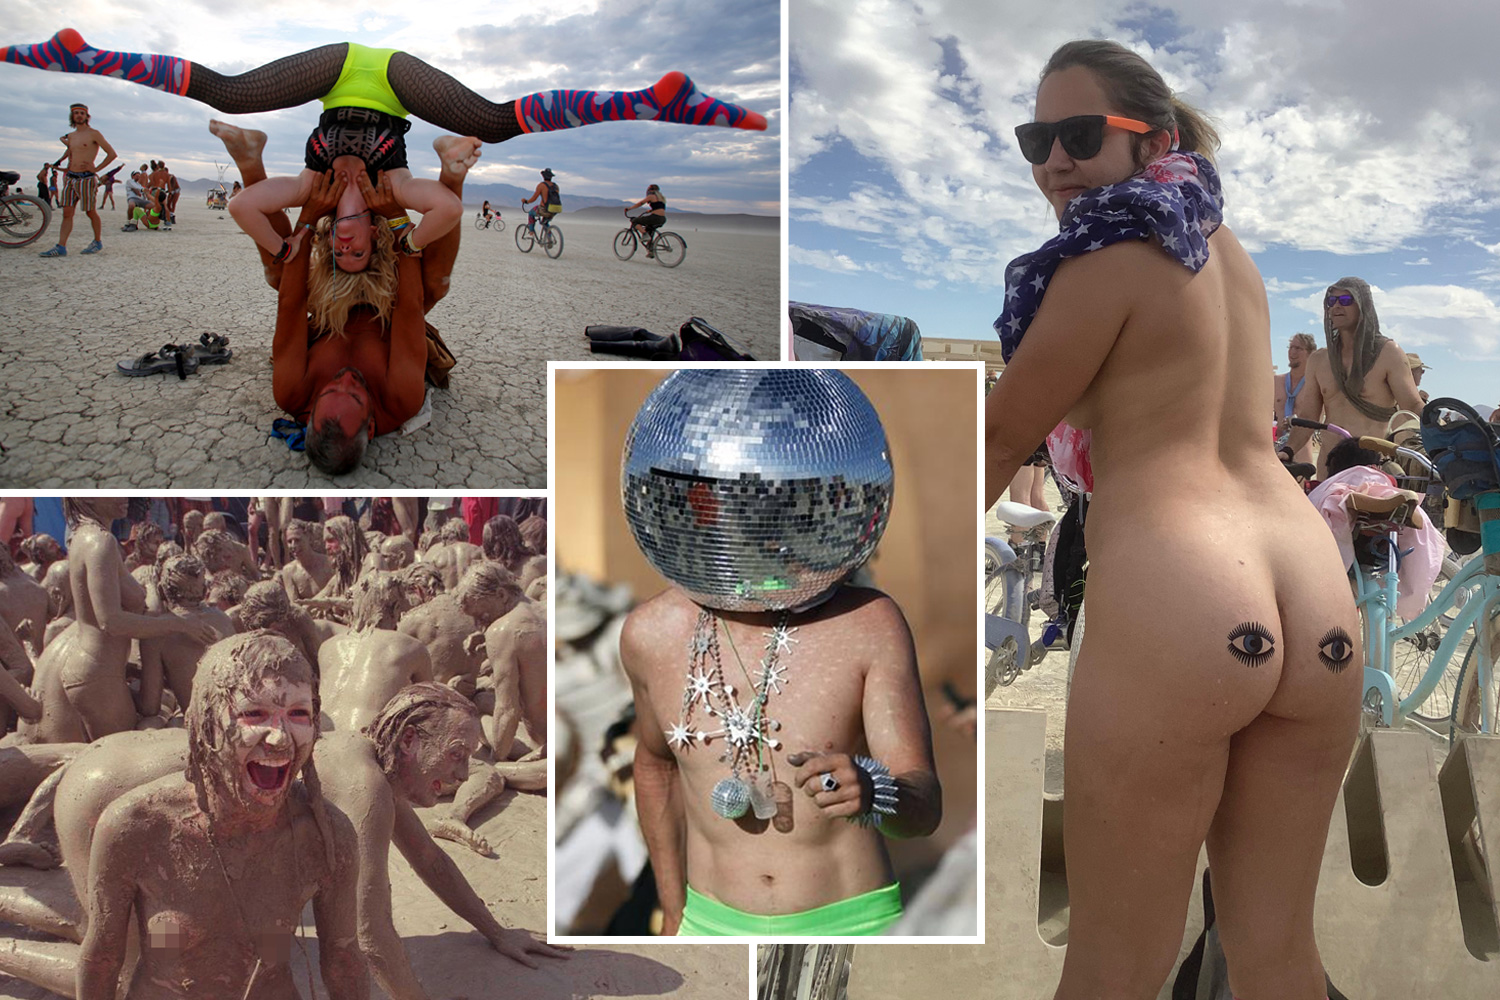 Best of Burning man 2017 nudity